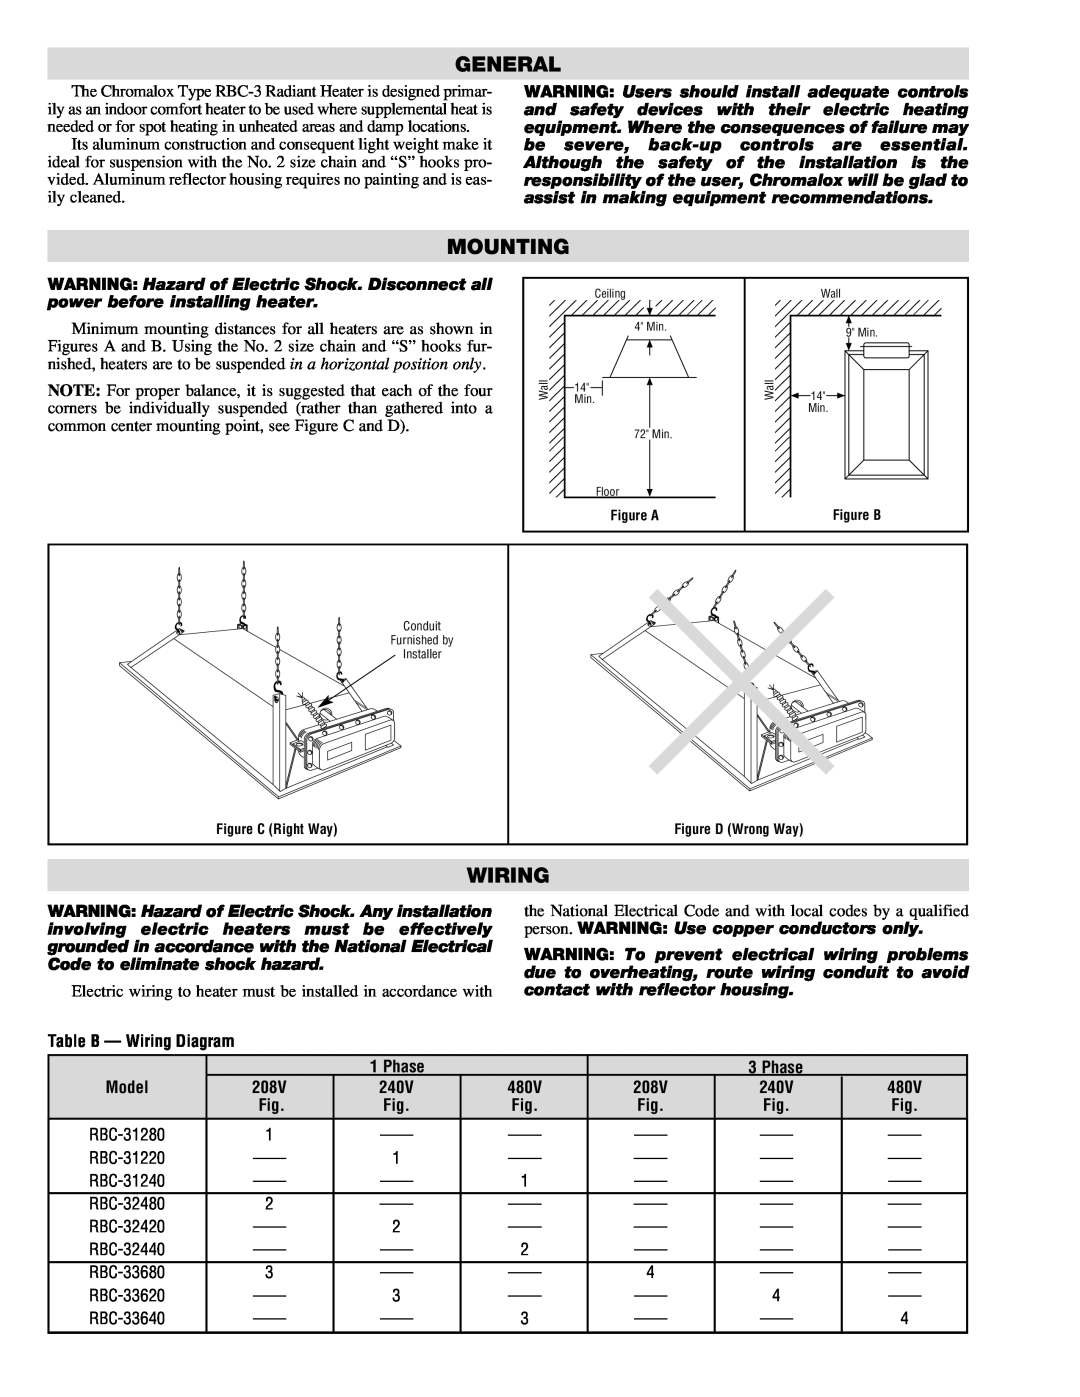 Chromalox PG416-4 manual General, Mounting, Table B - Wiring Diagram, Model, 208V, 240V, 480V, Phase 